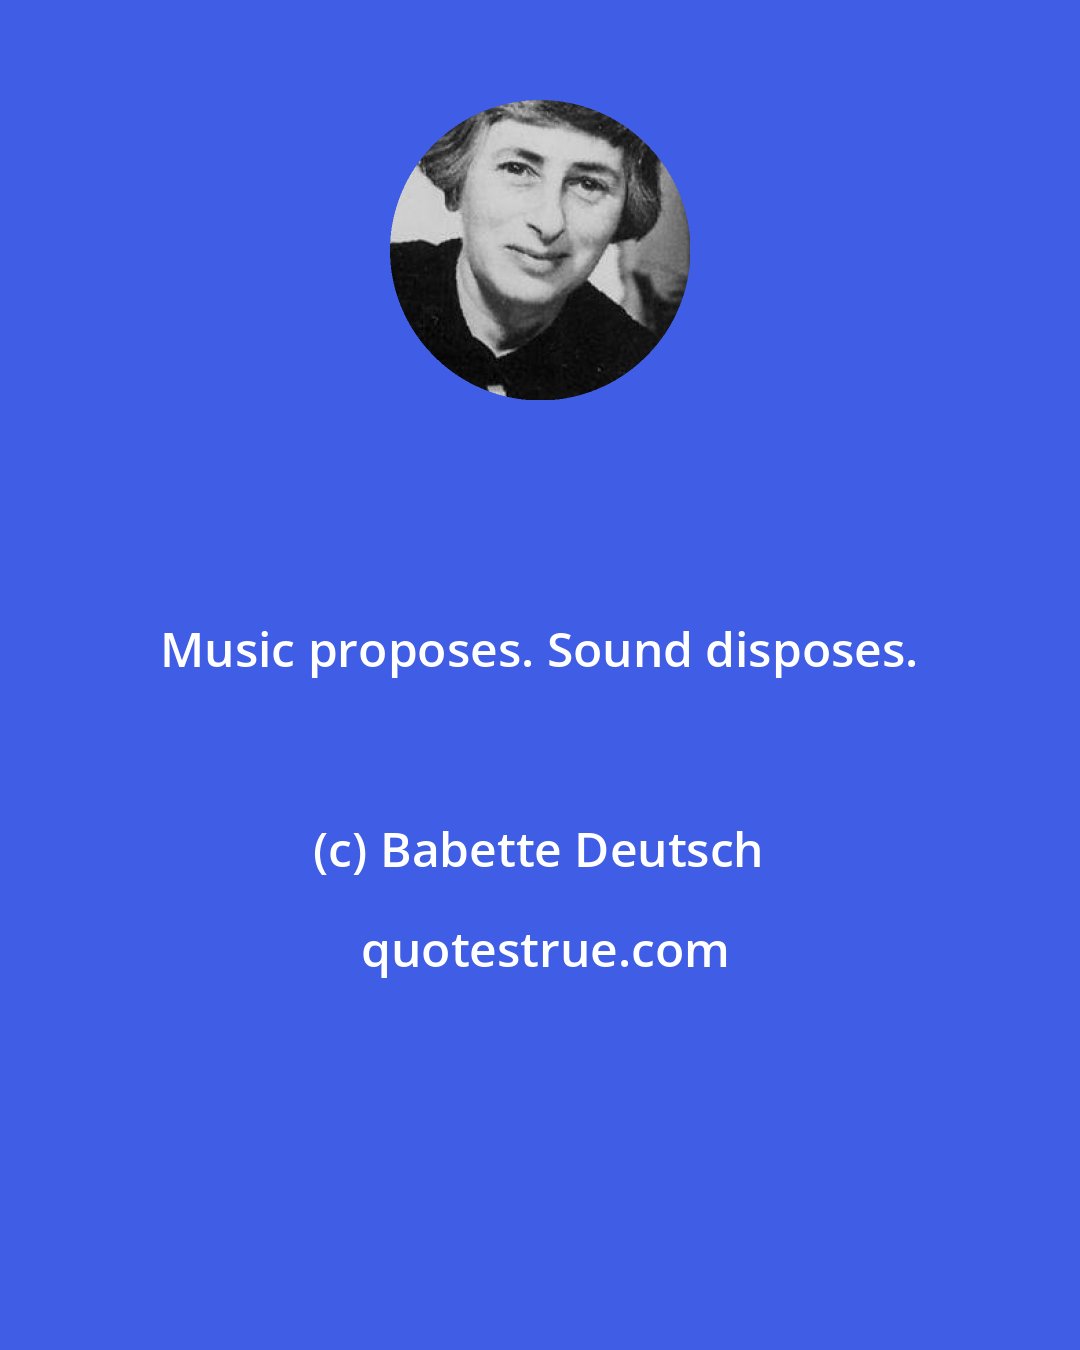 Babette Deutsch: Music proposes. Sound disposes.